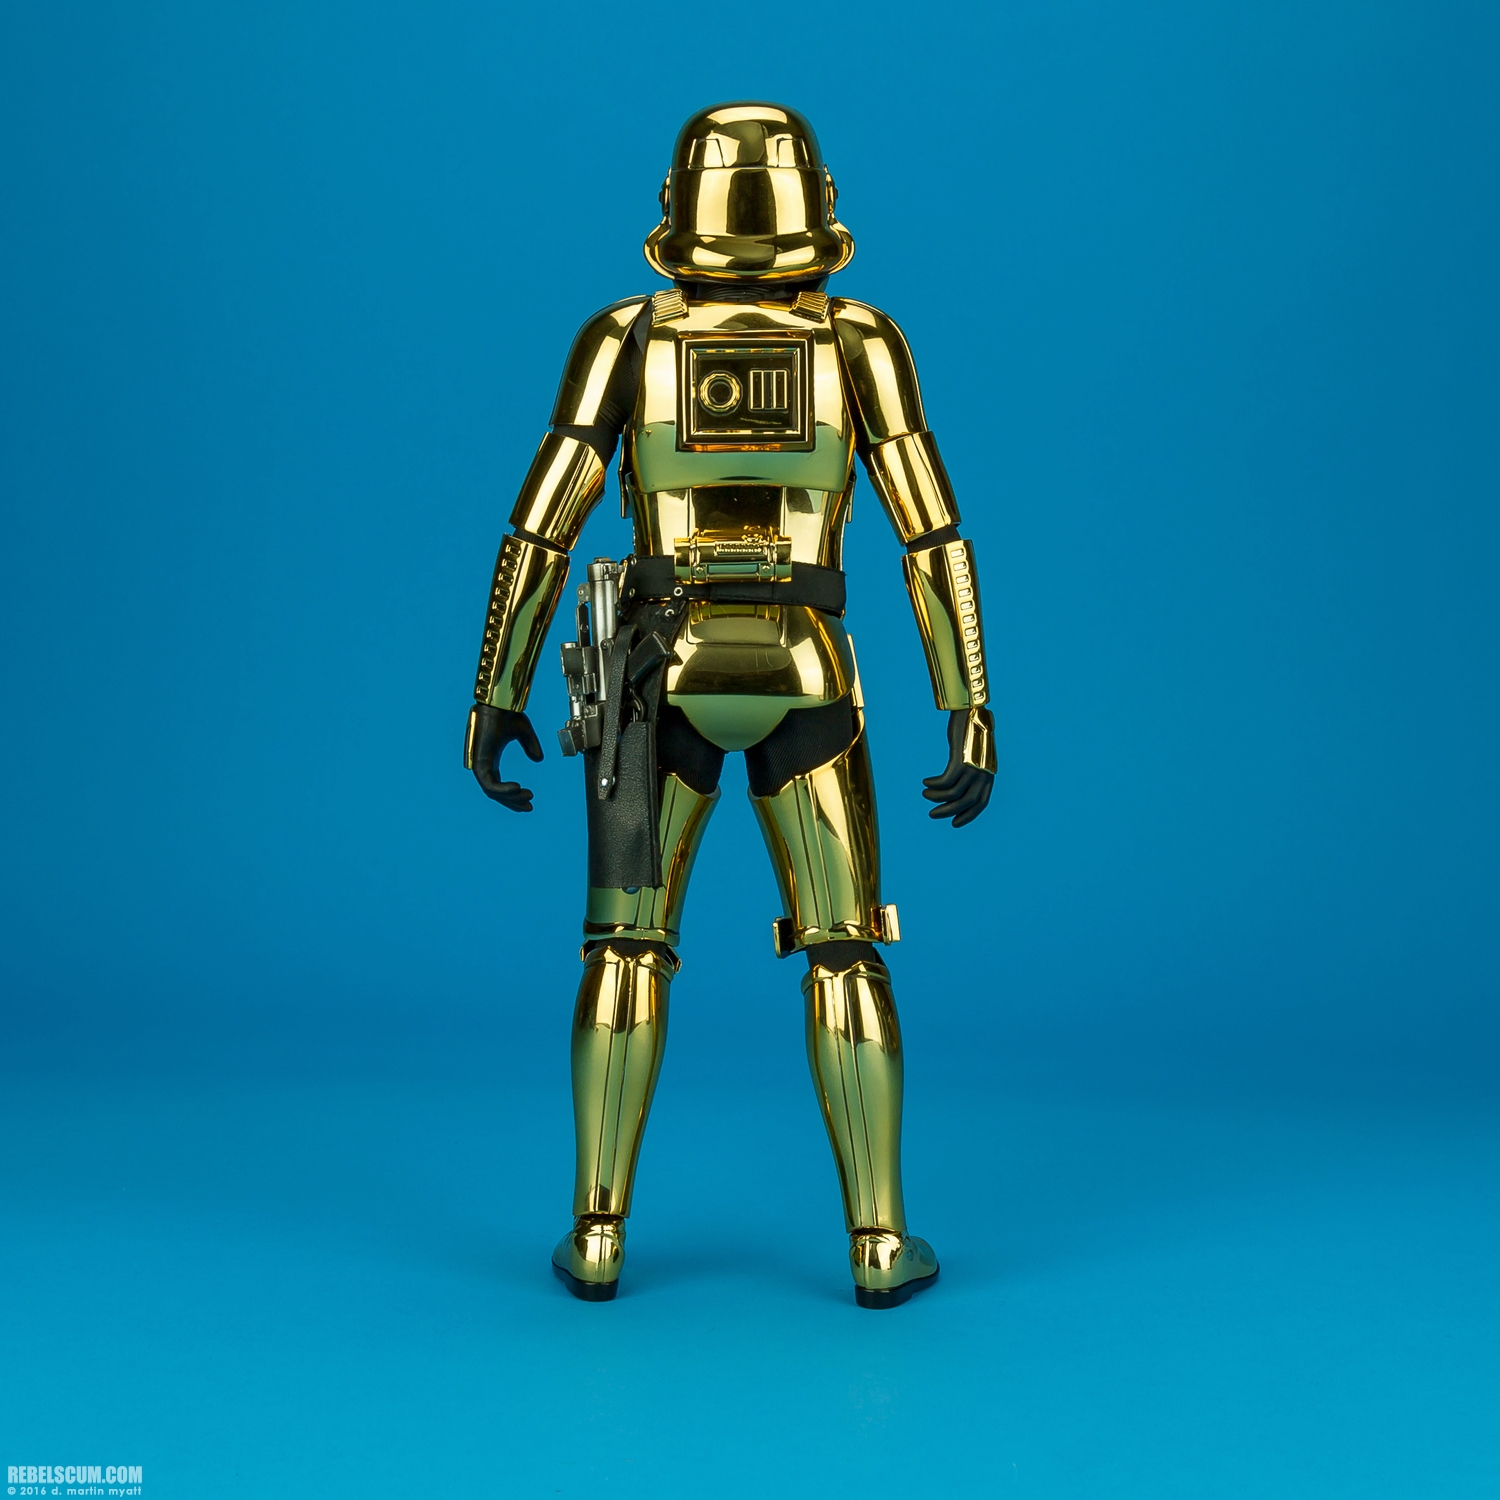 MMS364-Stormtrooper-Gold-Chrome-Version-Hot-Toys-004.jpg